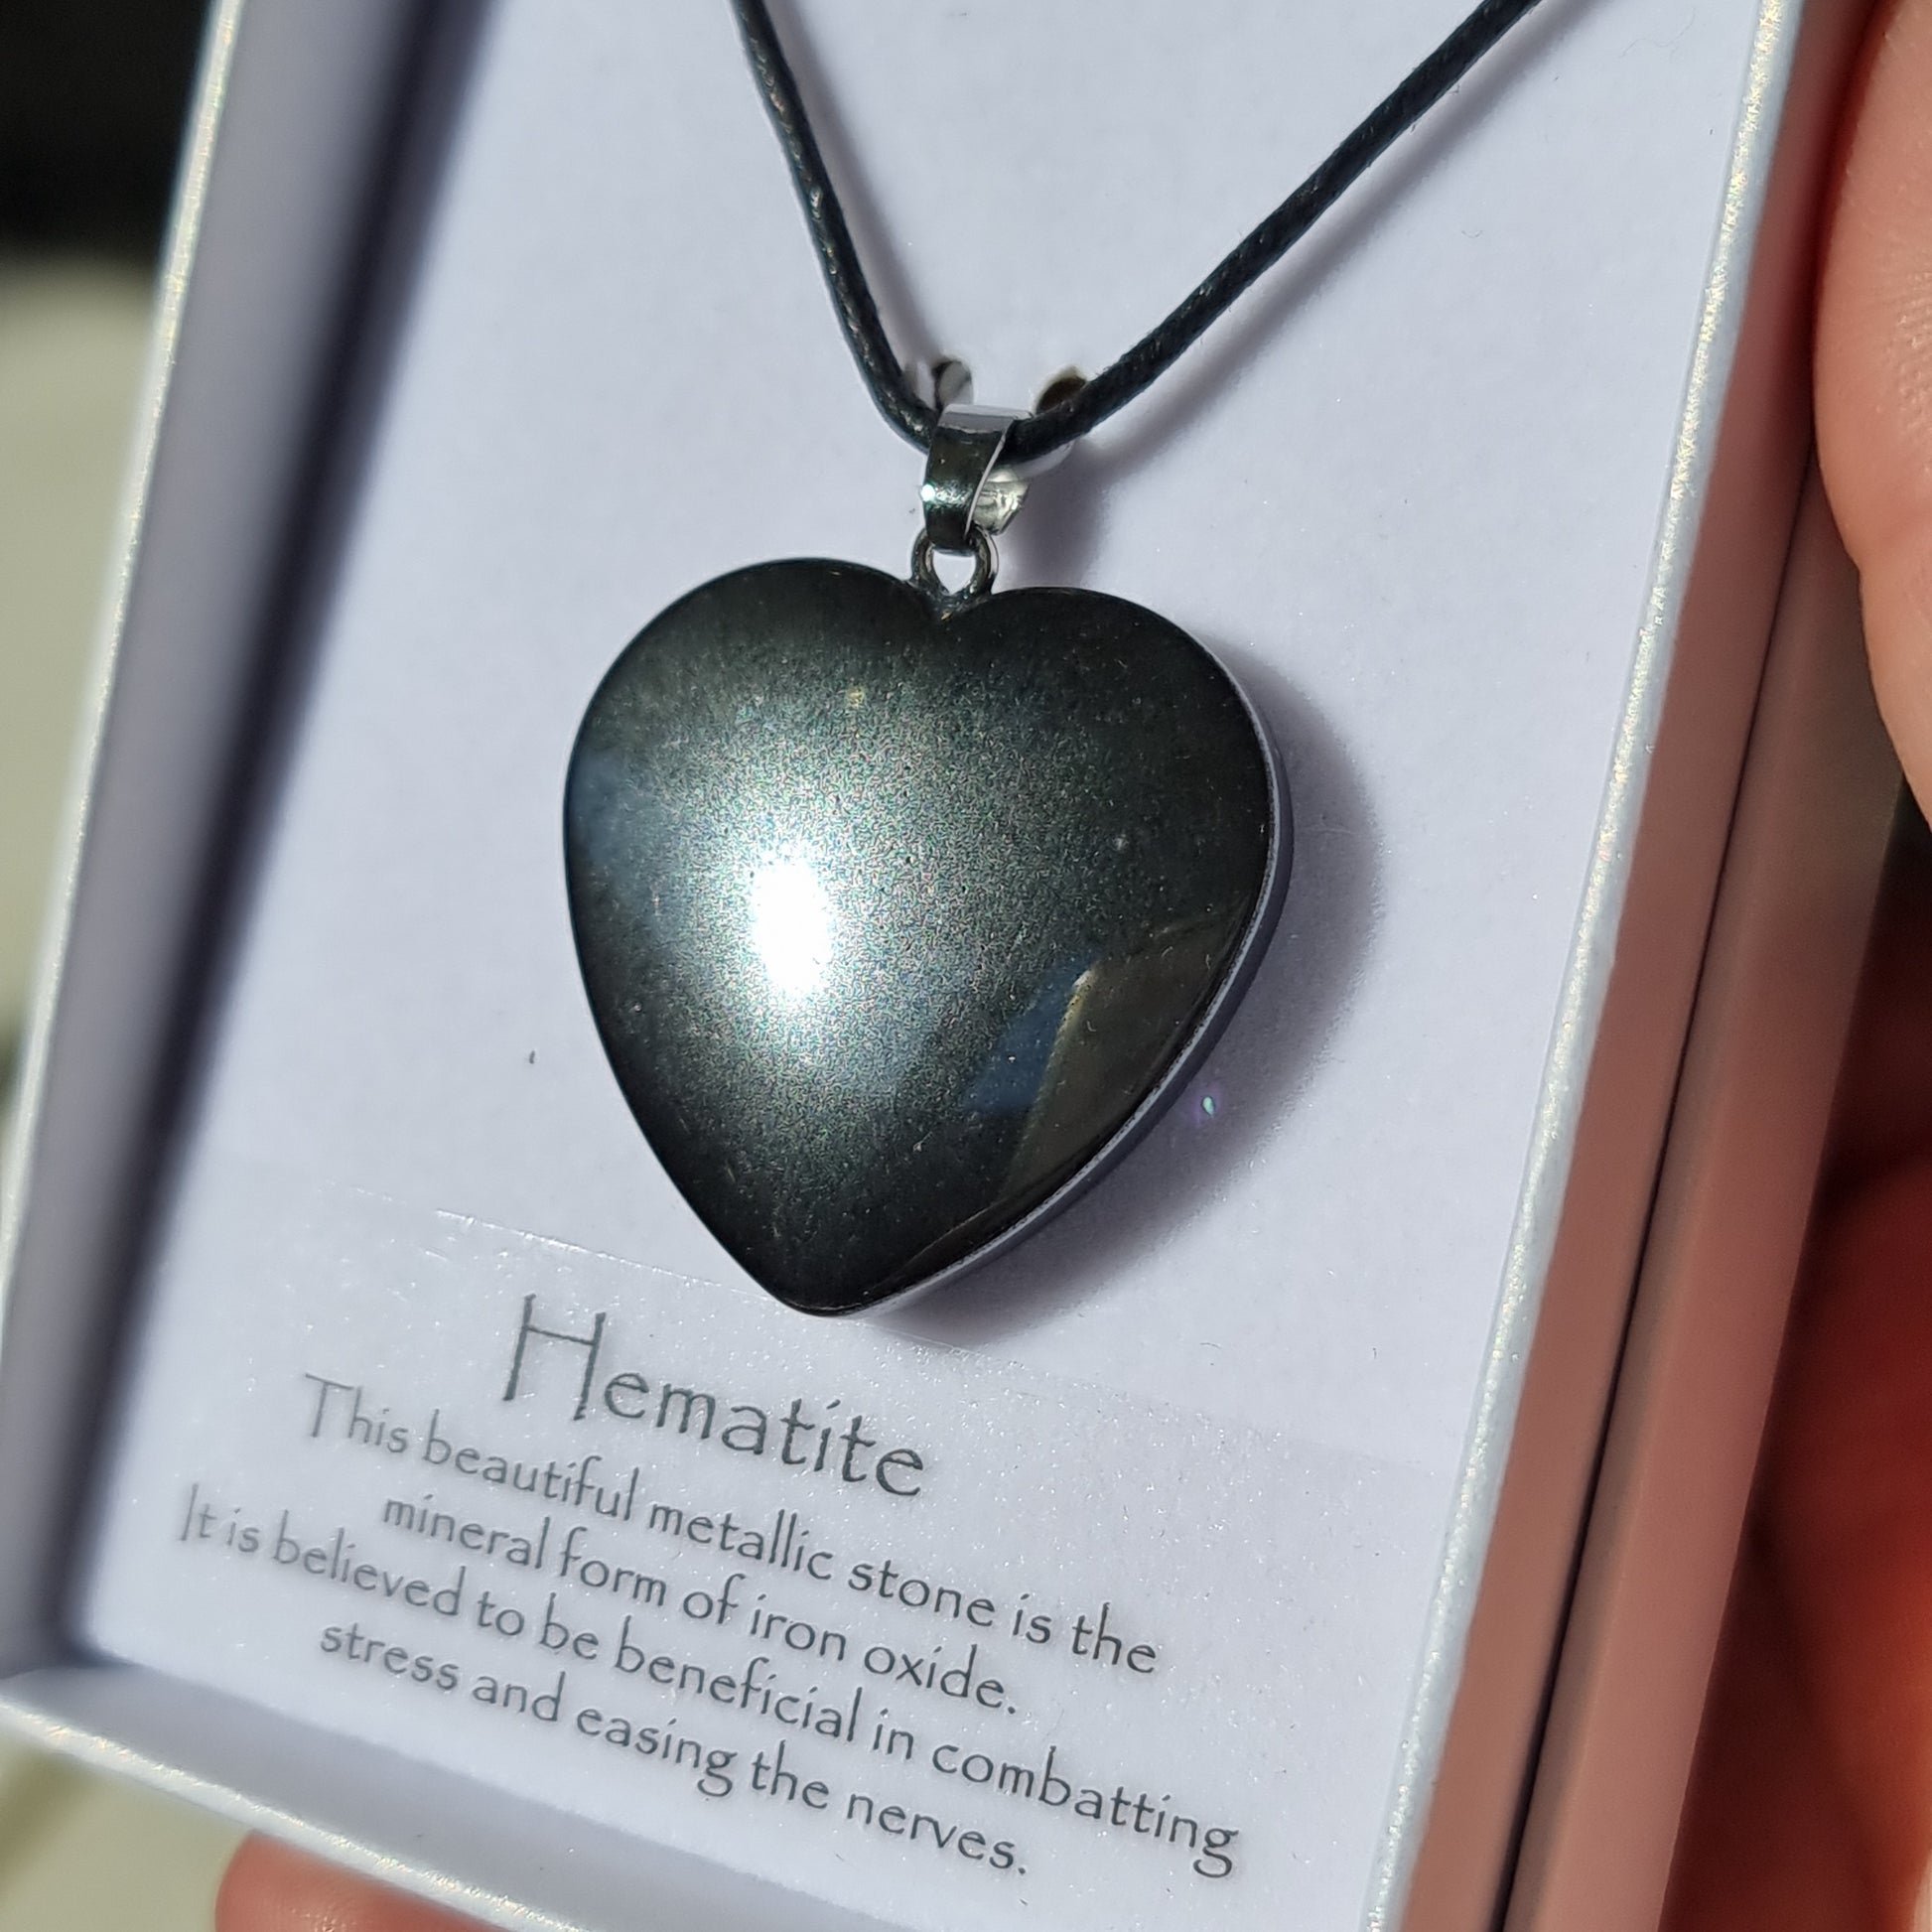 Hematite heart pendant - Rivendell Shop